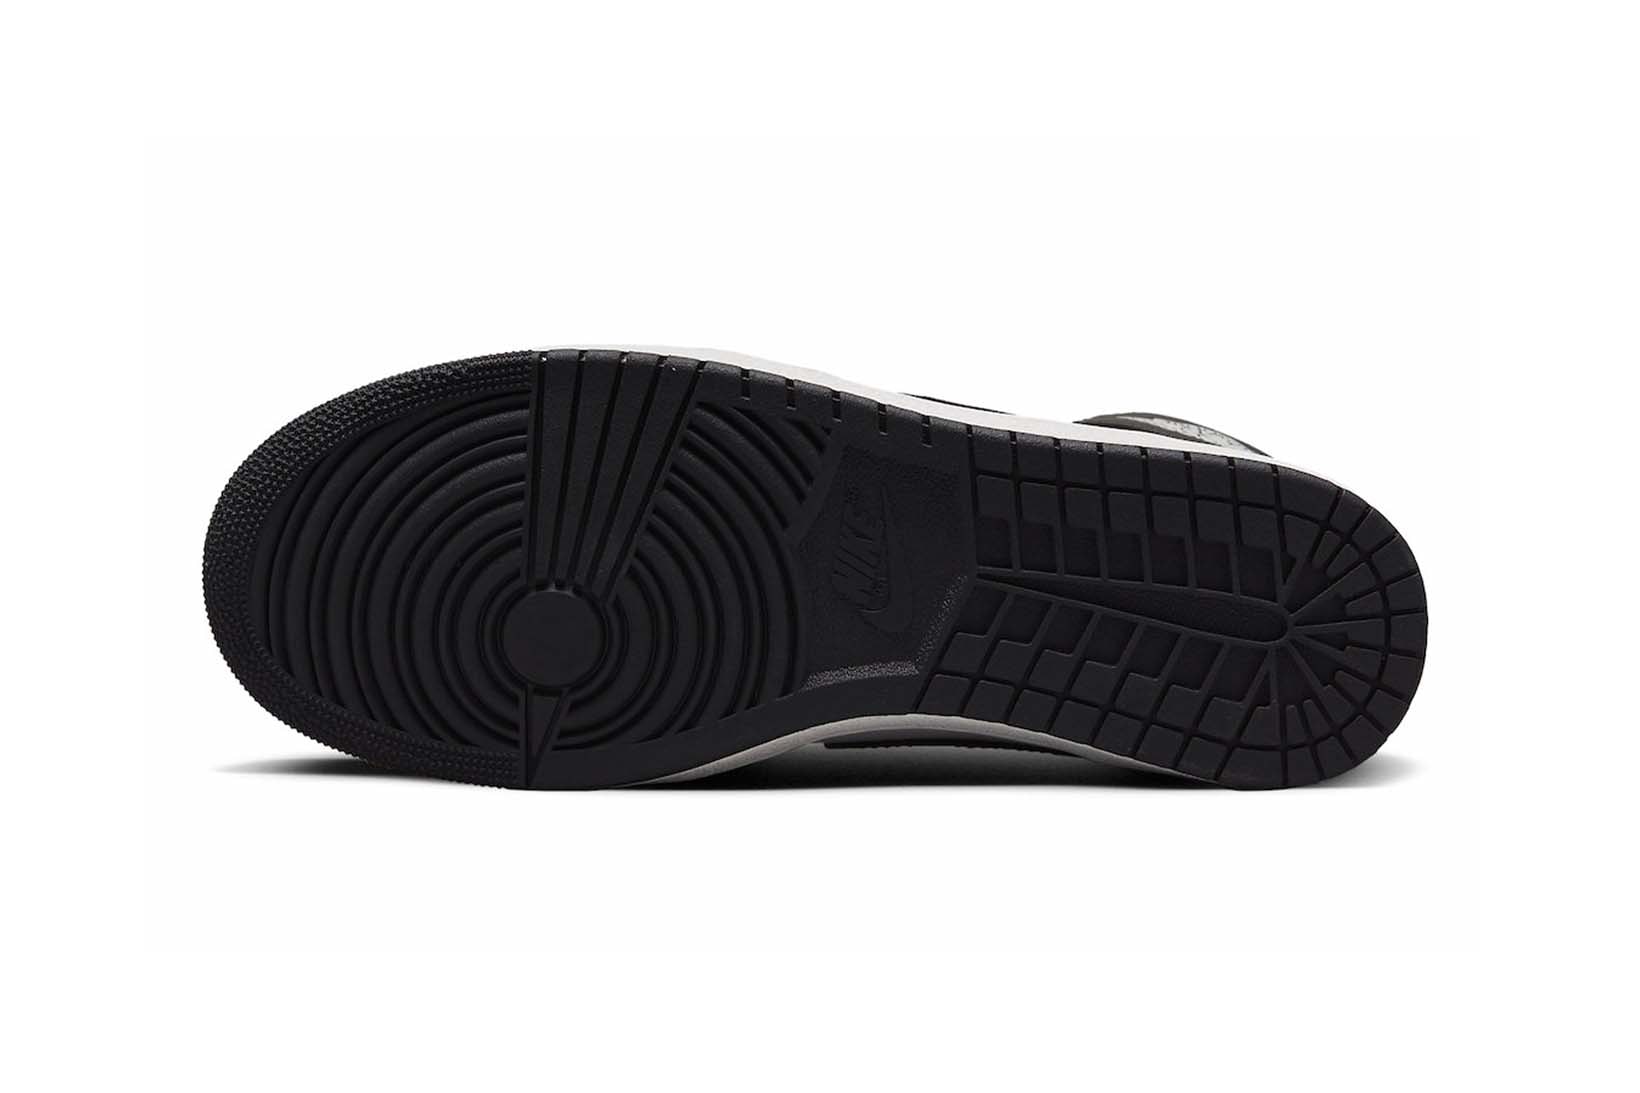 Air Jordan 1 High '85 Black/White Sneakers: Release Date, Price